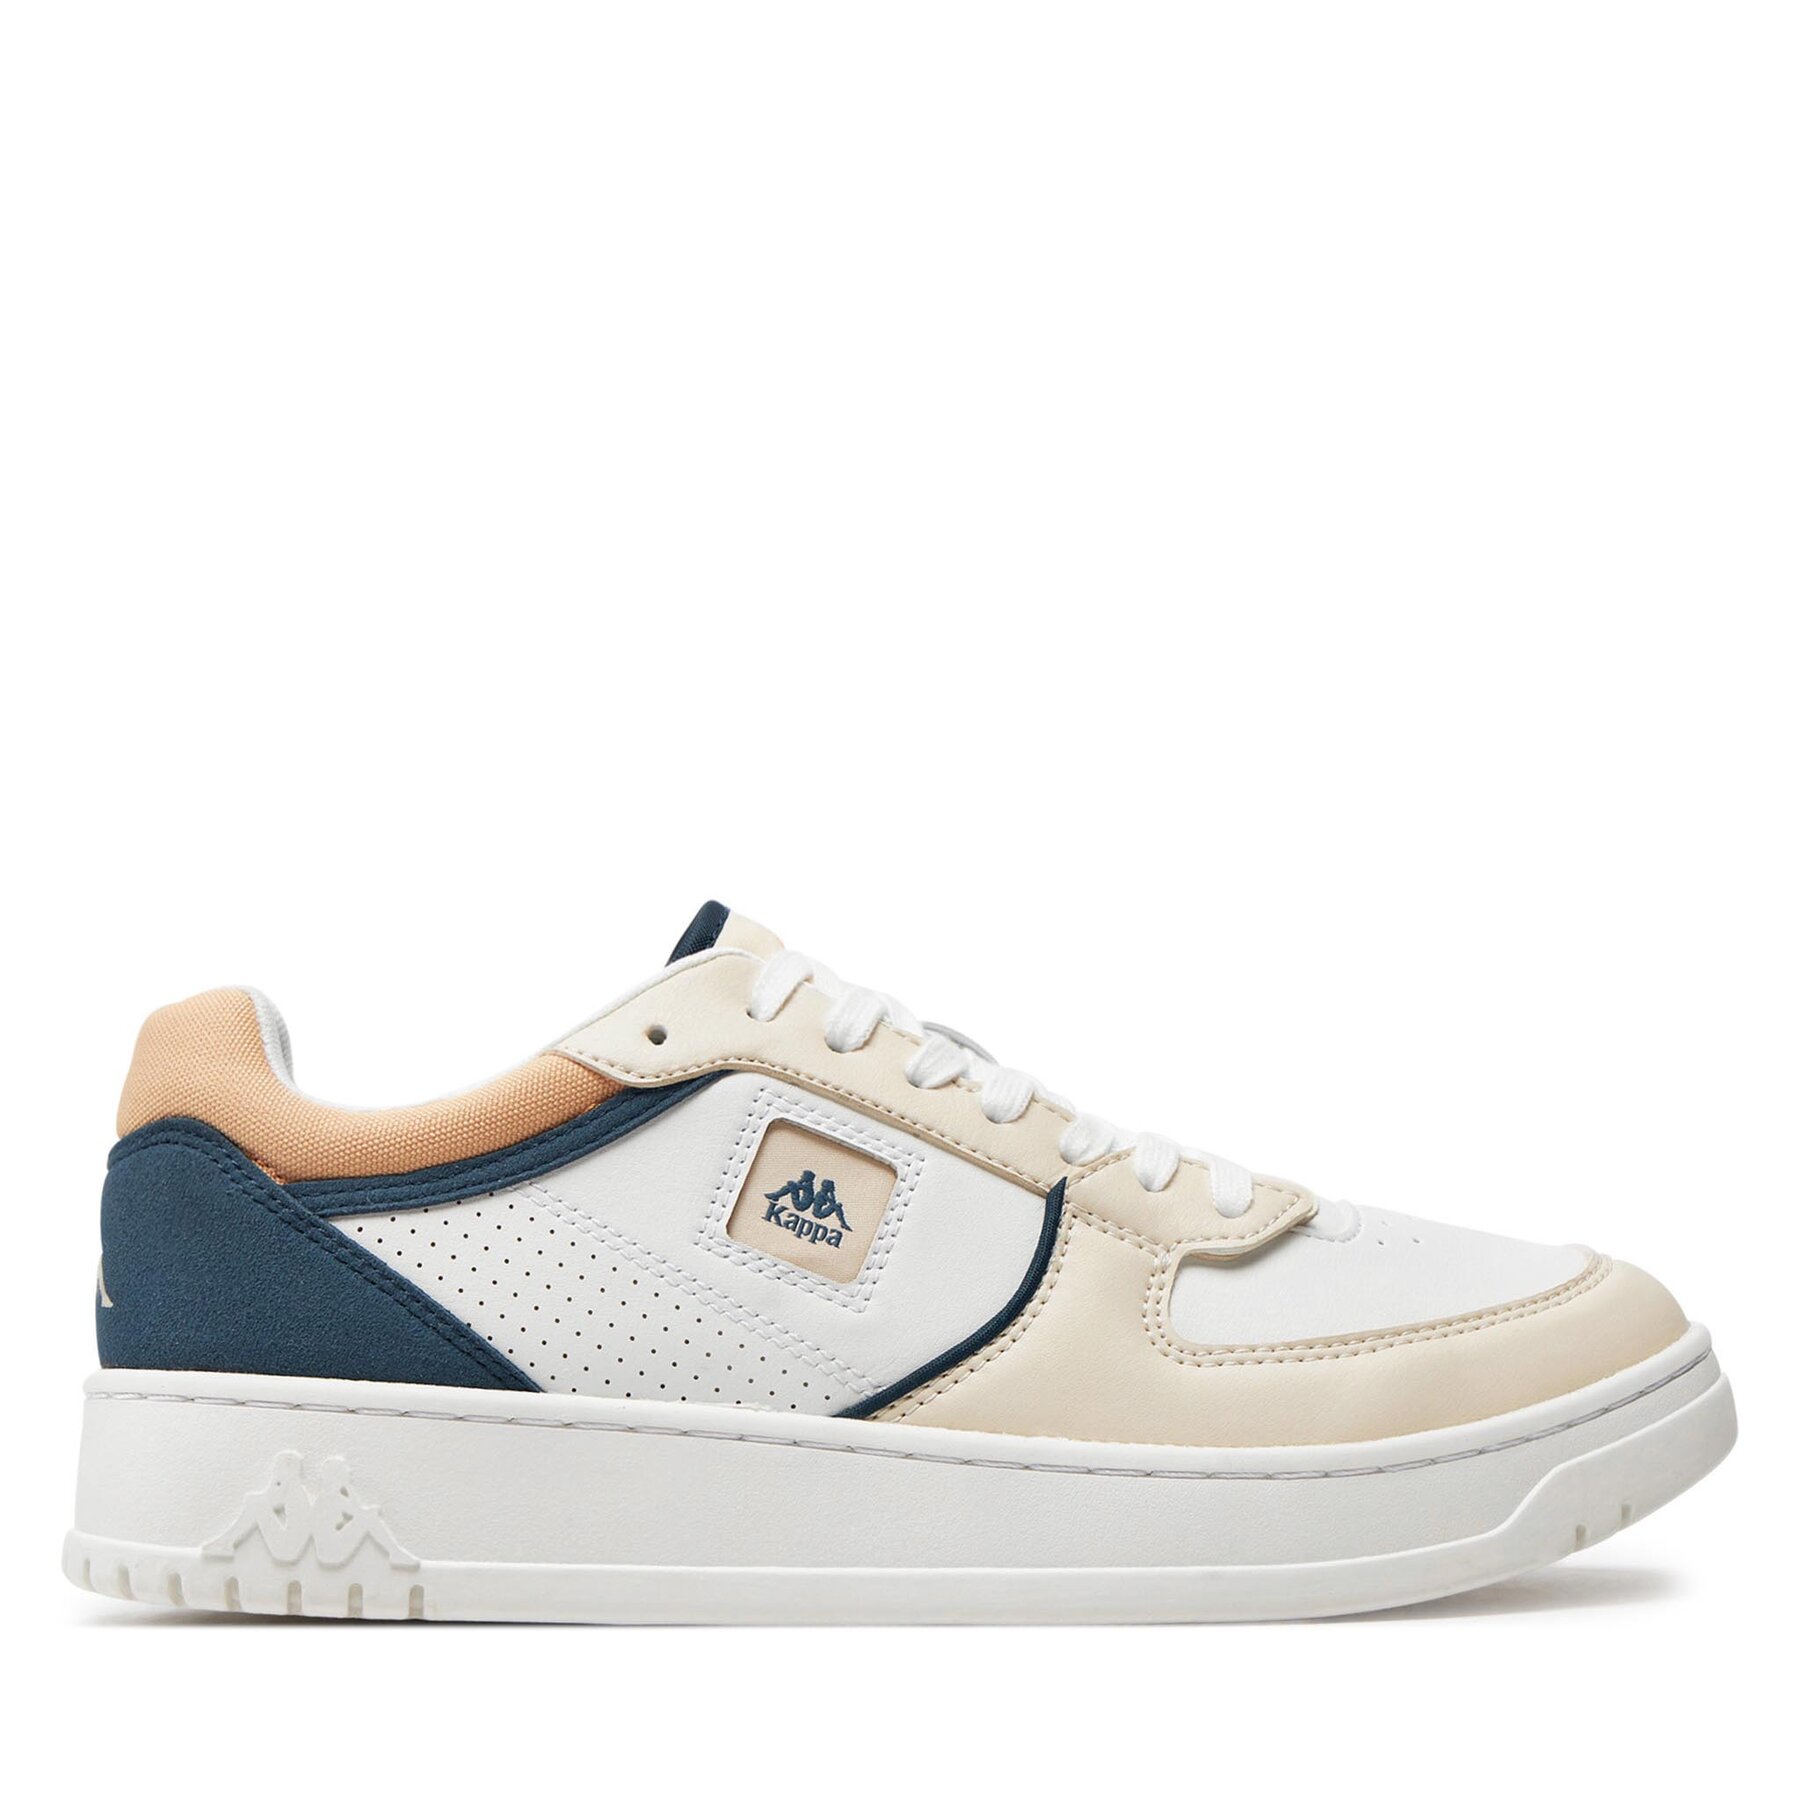 Sneakers Kappa Authentic Barney 1 381D5EW White Off/White/Blue Navy A1E von Kappa